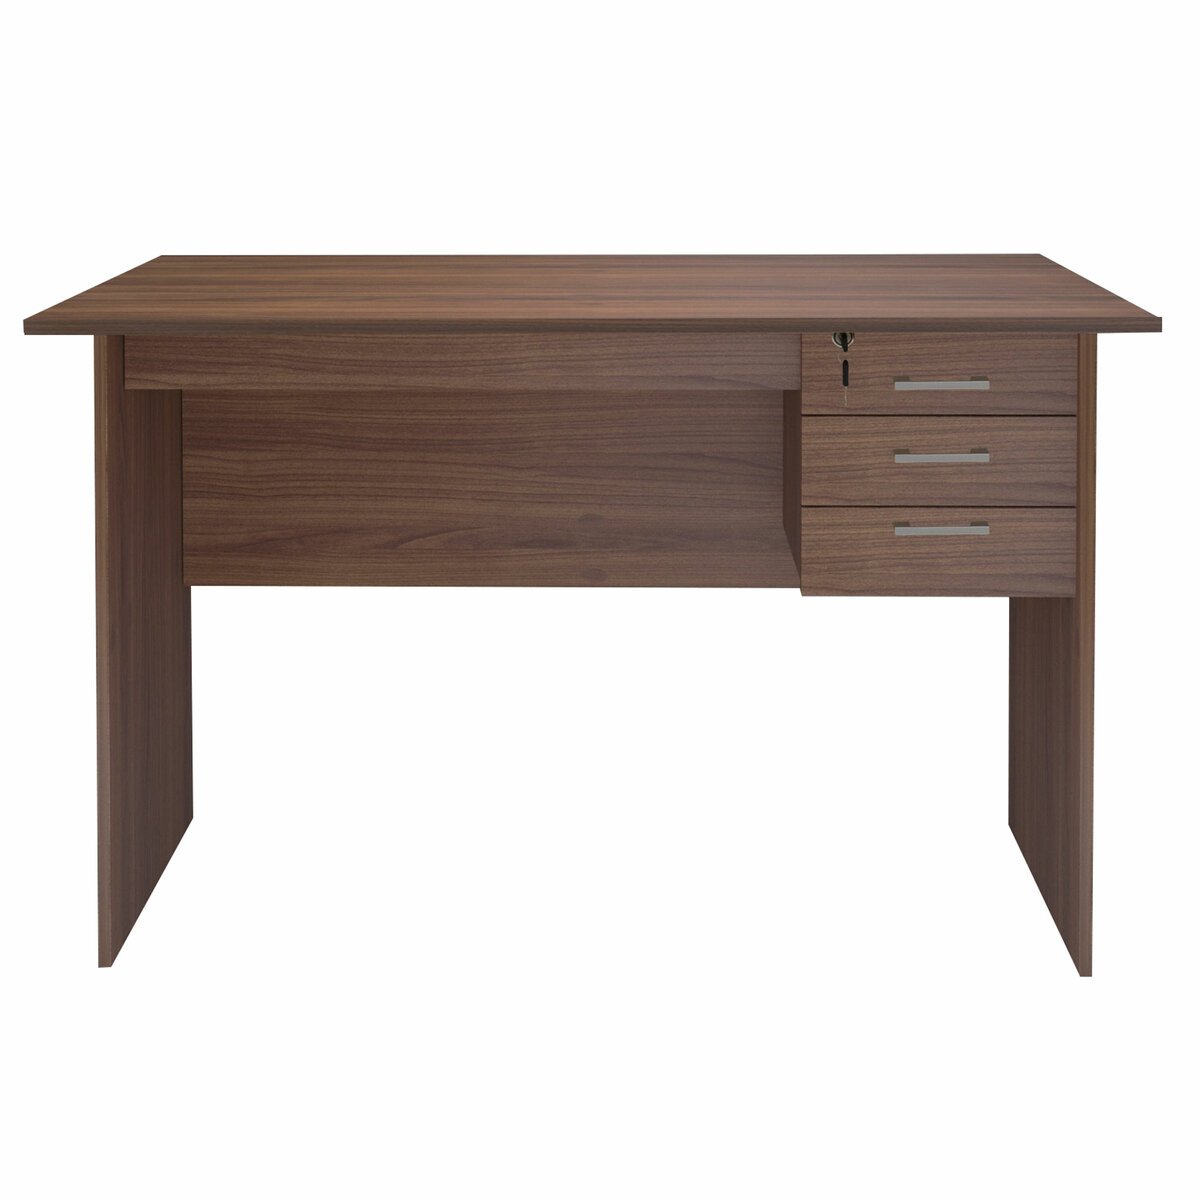 Maple Leaf Home Office Desk Brown,Size: W60 x L120 x H75cm